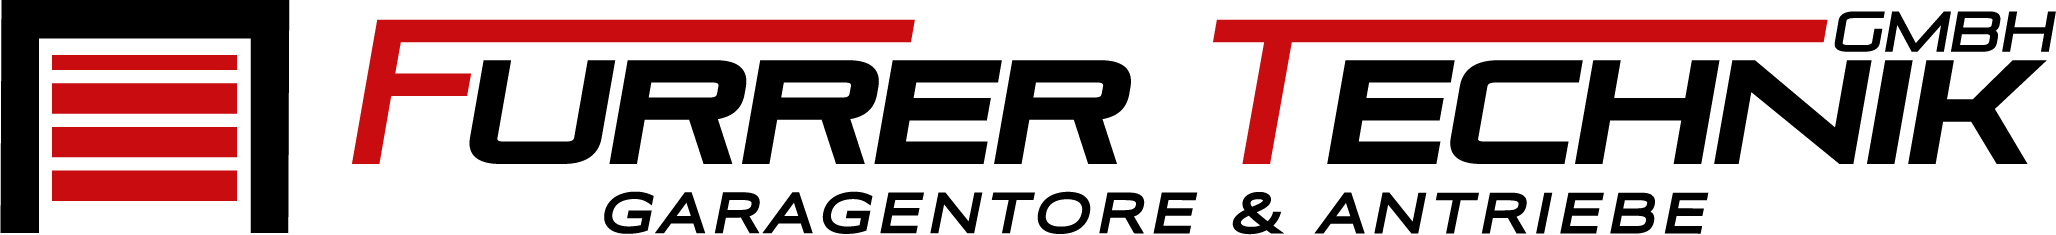 Furrer Technik GmbH Logo